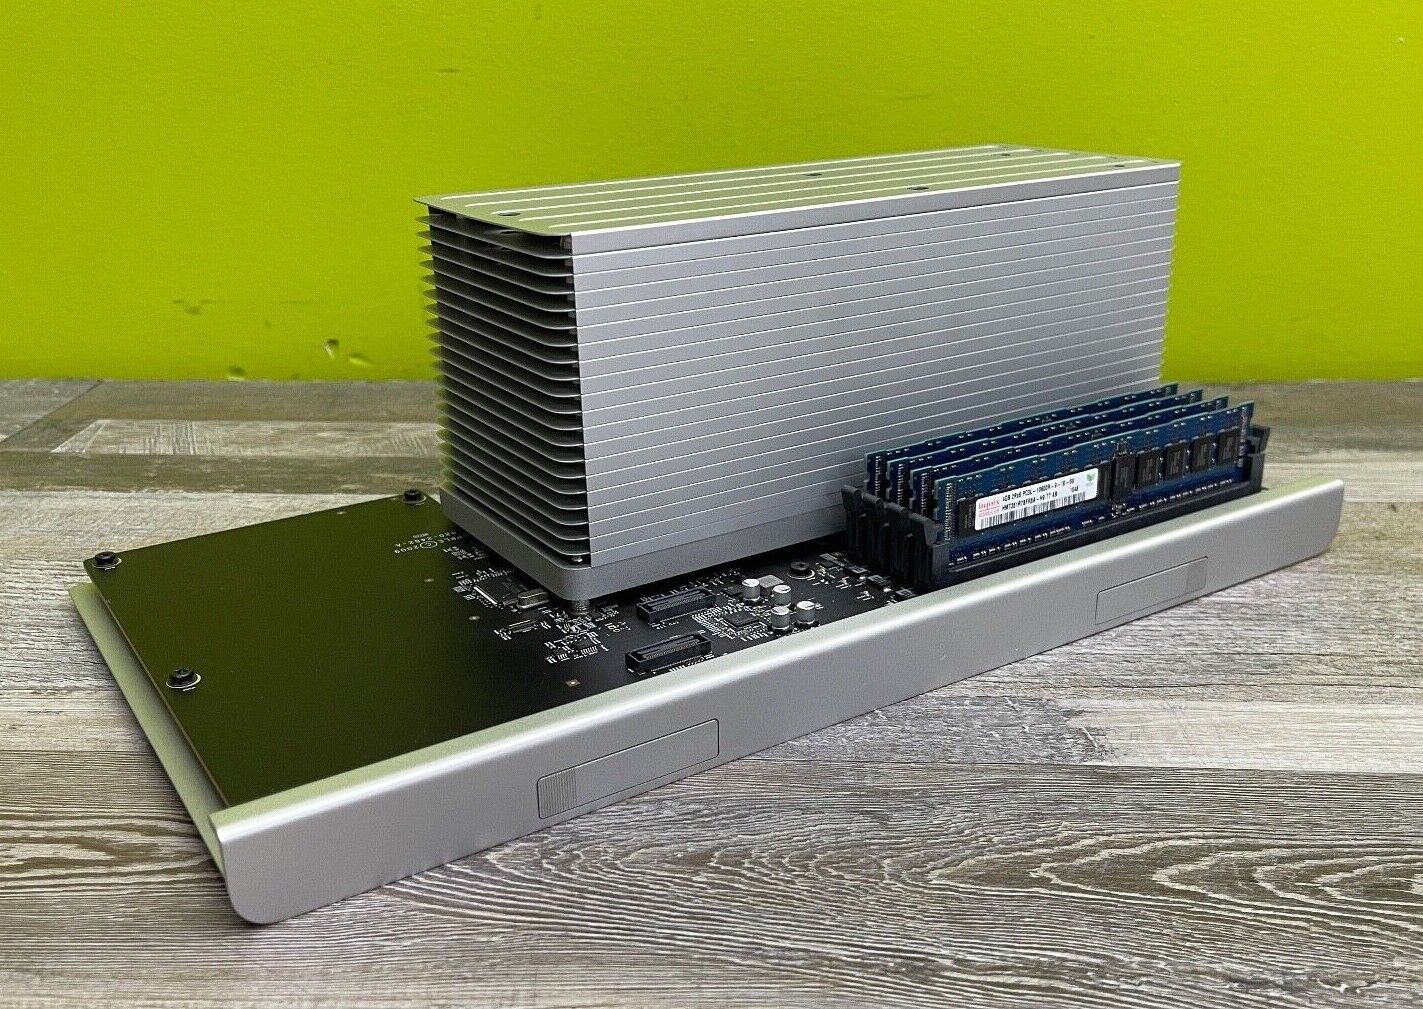 6-Core Westmere 3.33GHz 16GB-32GB RAM Mac Pro CPU Tray Upgrade 2009 4,1 to 5,1